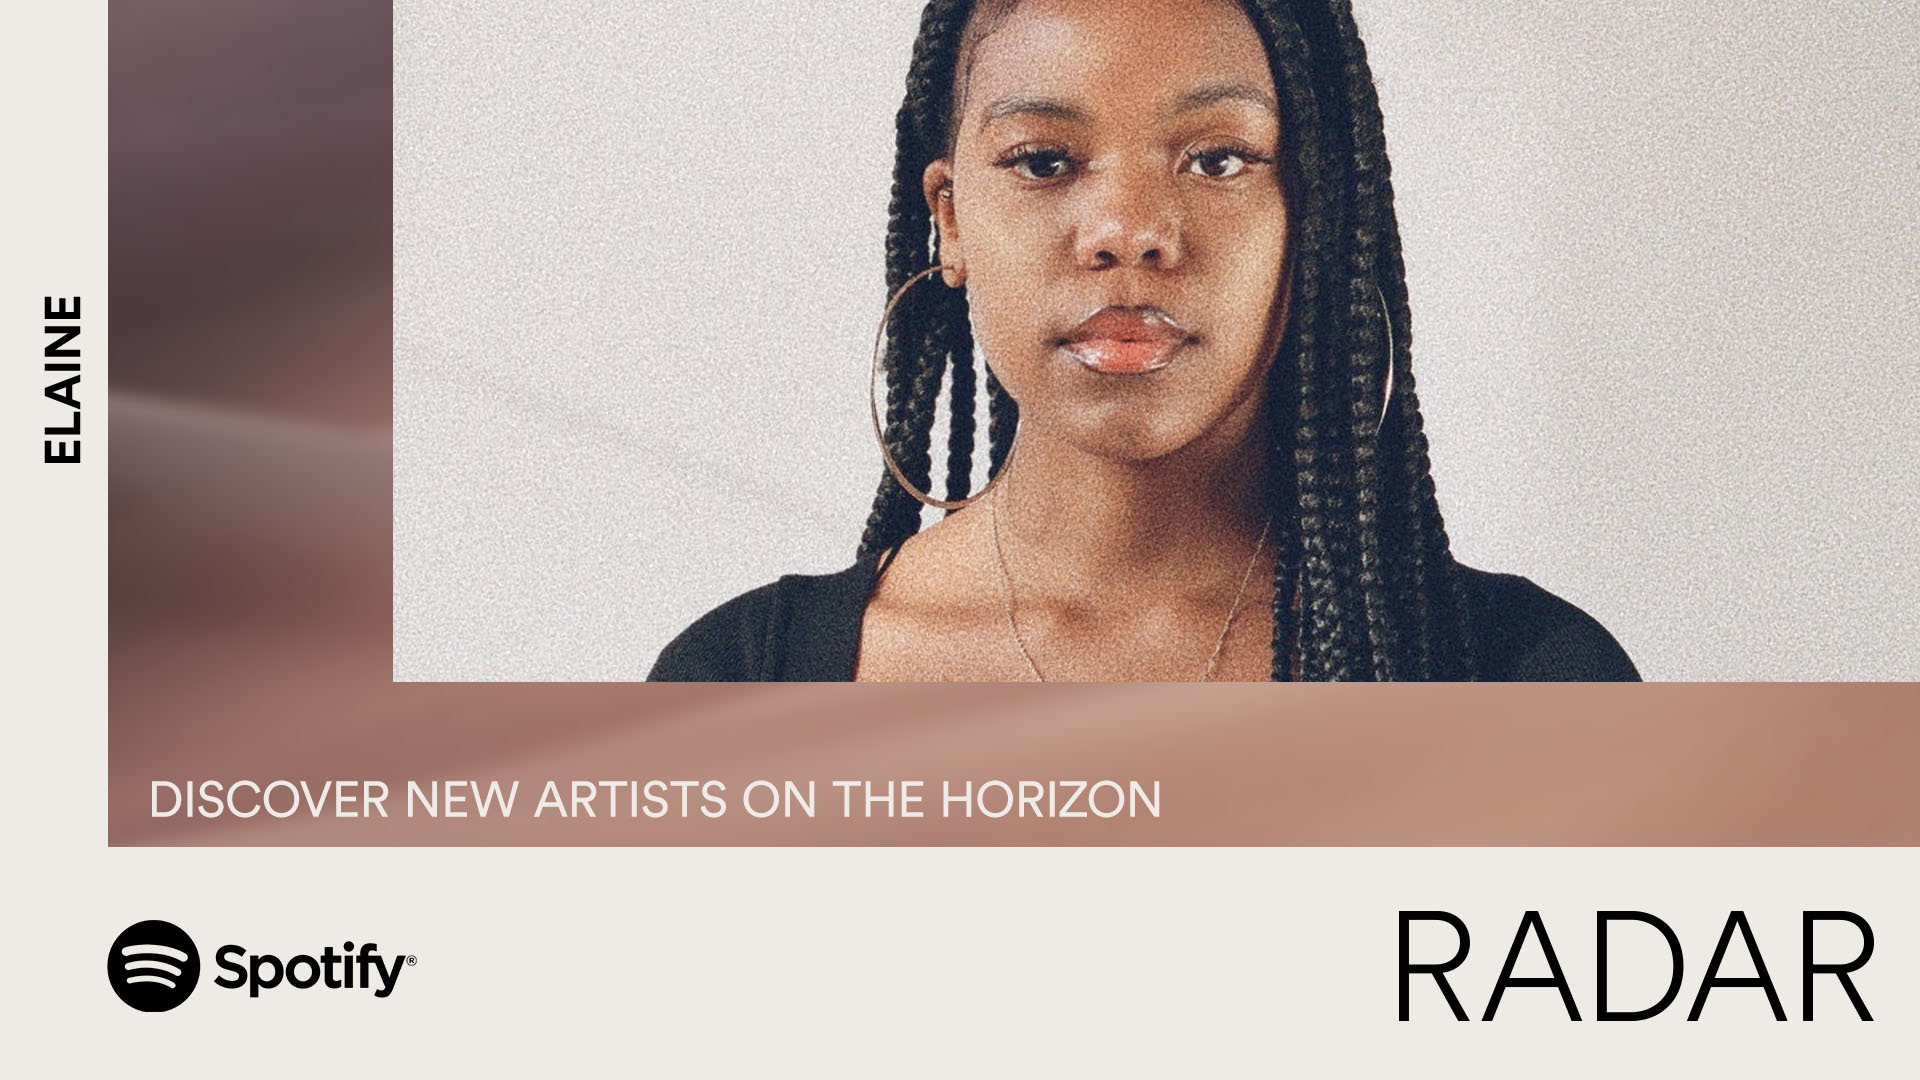 RADAR, Global Artist Emerging Programme